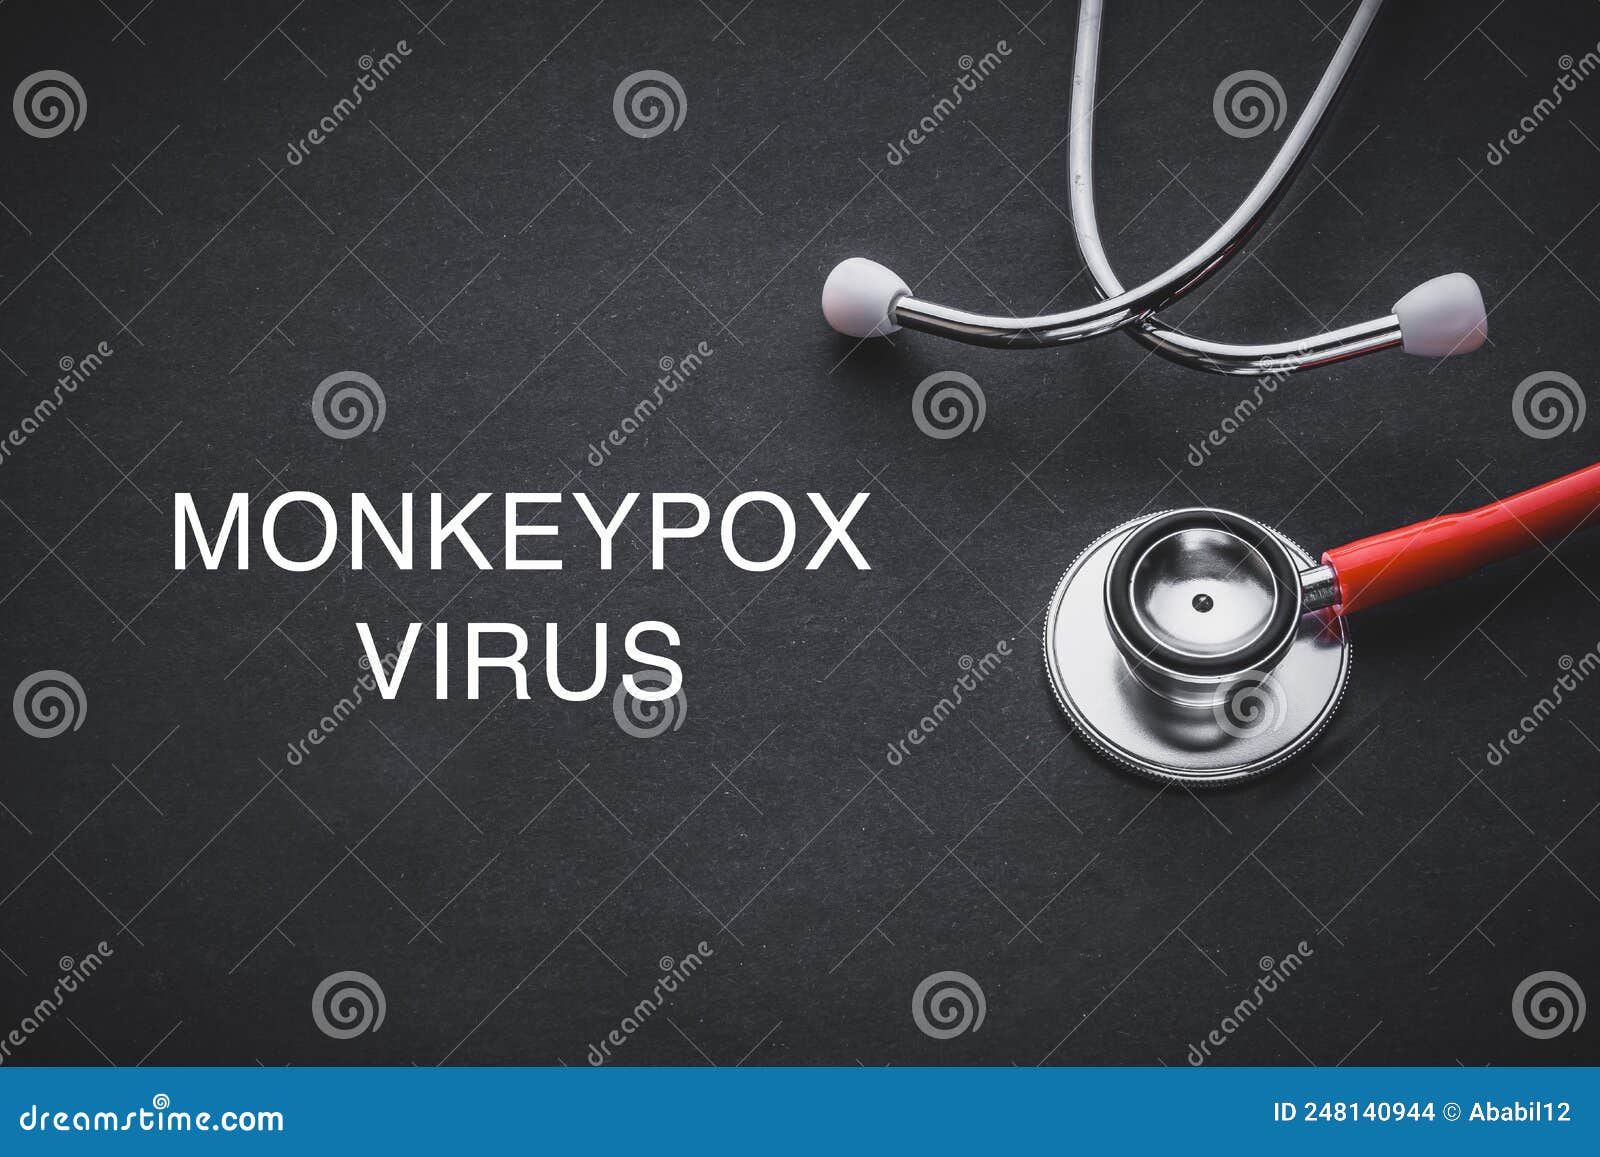 monkeypox virus words written with stethoscope on black background.